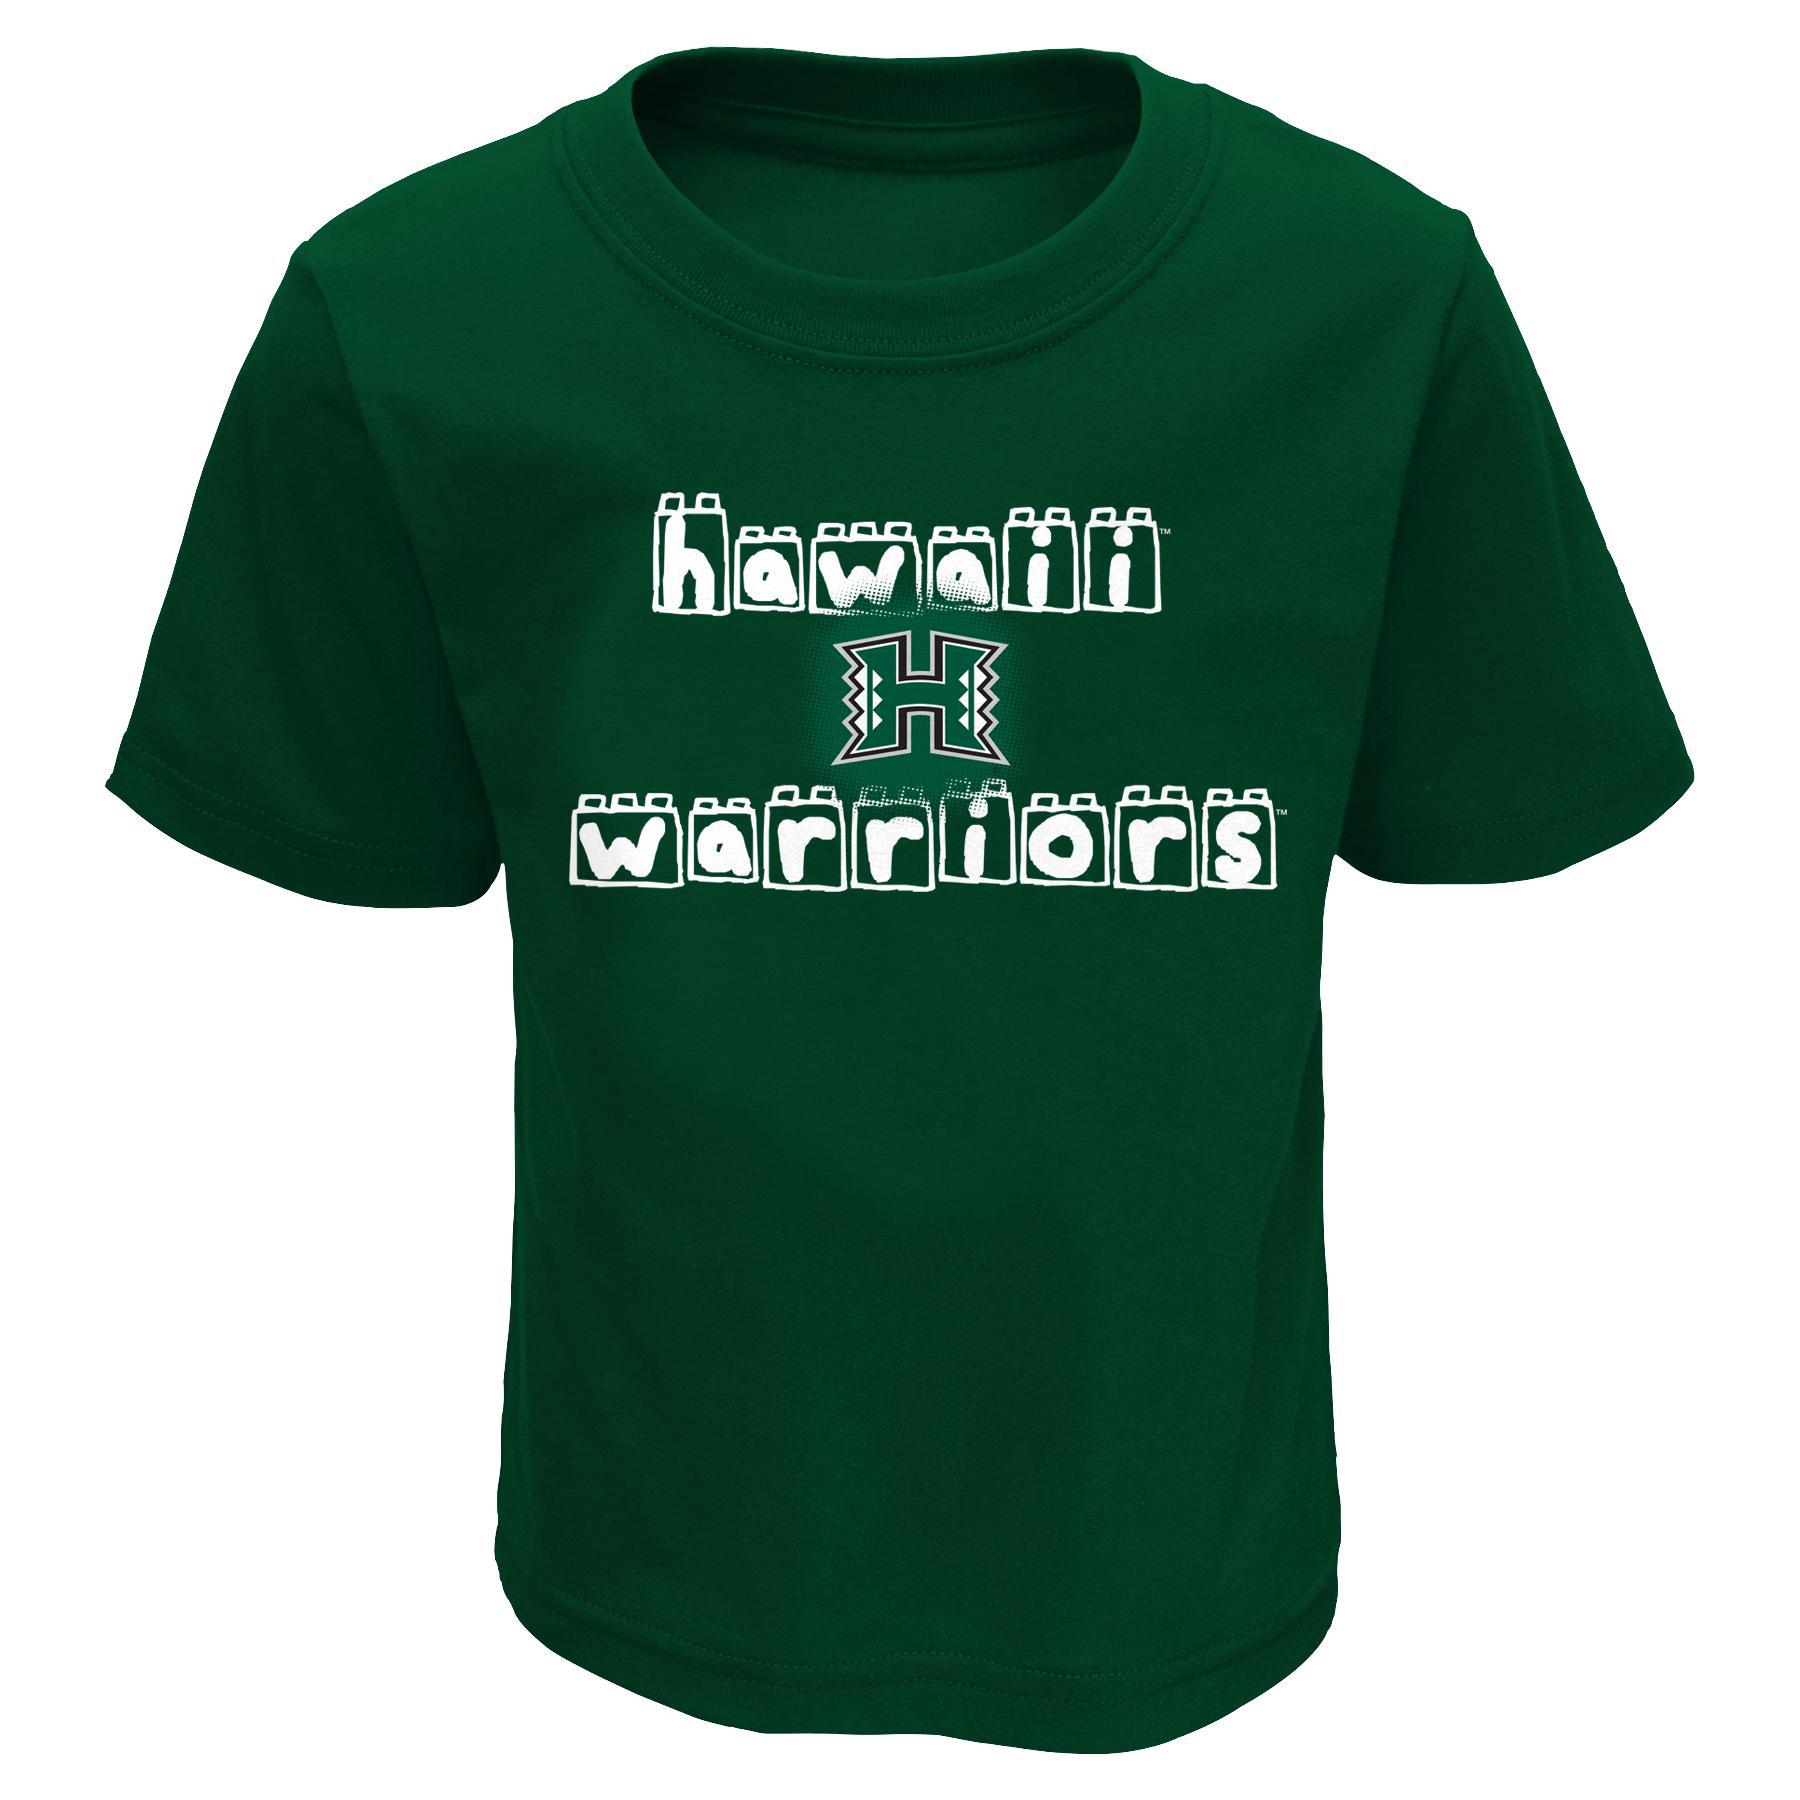 NCAA Toddler's Graphic T-Shirt - Hawaii Warriors